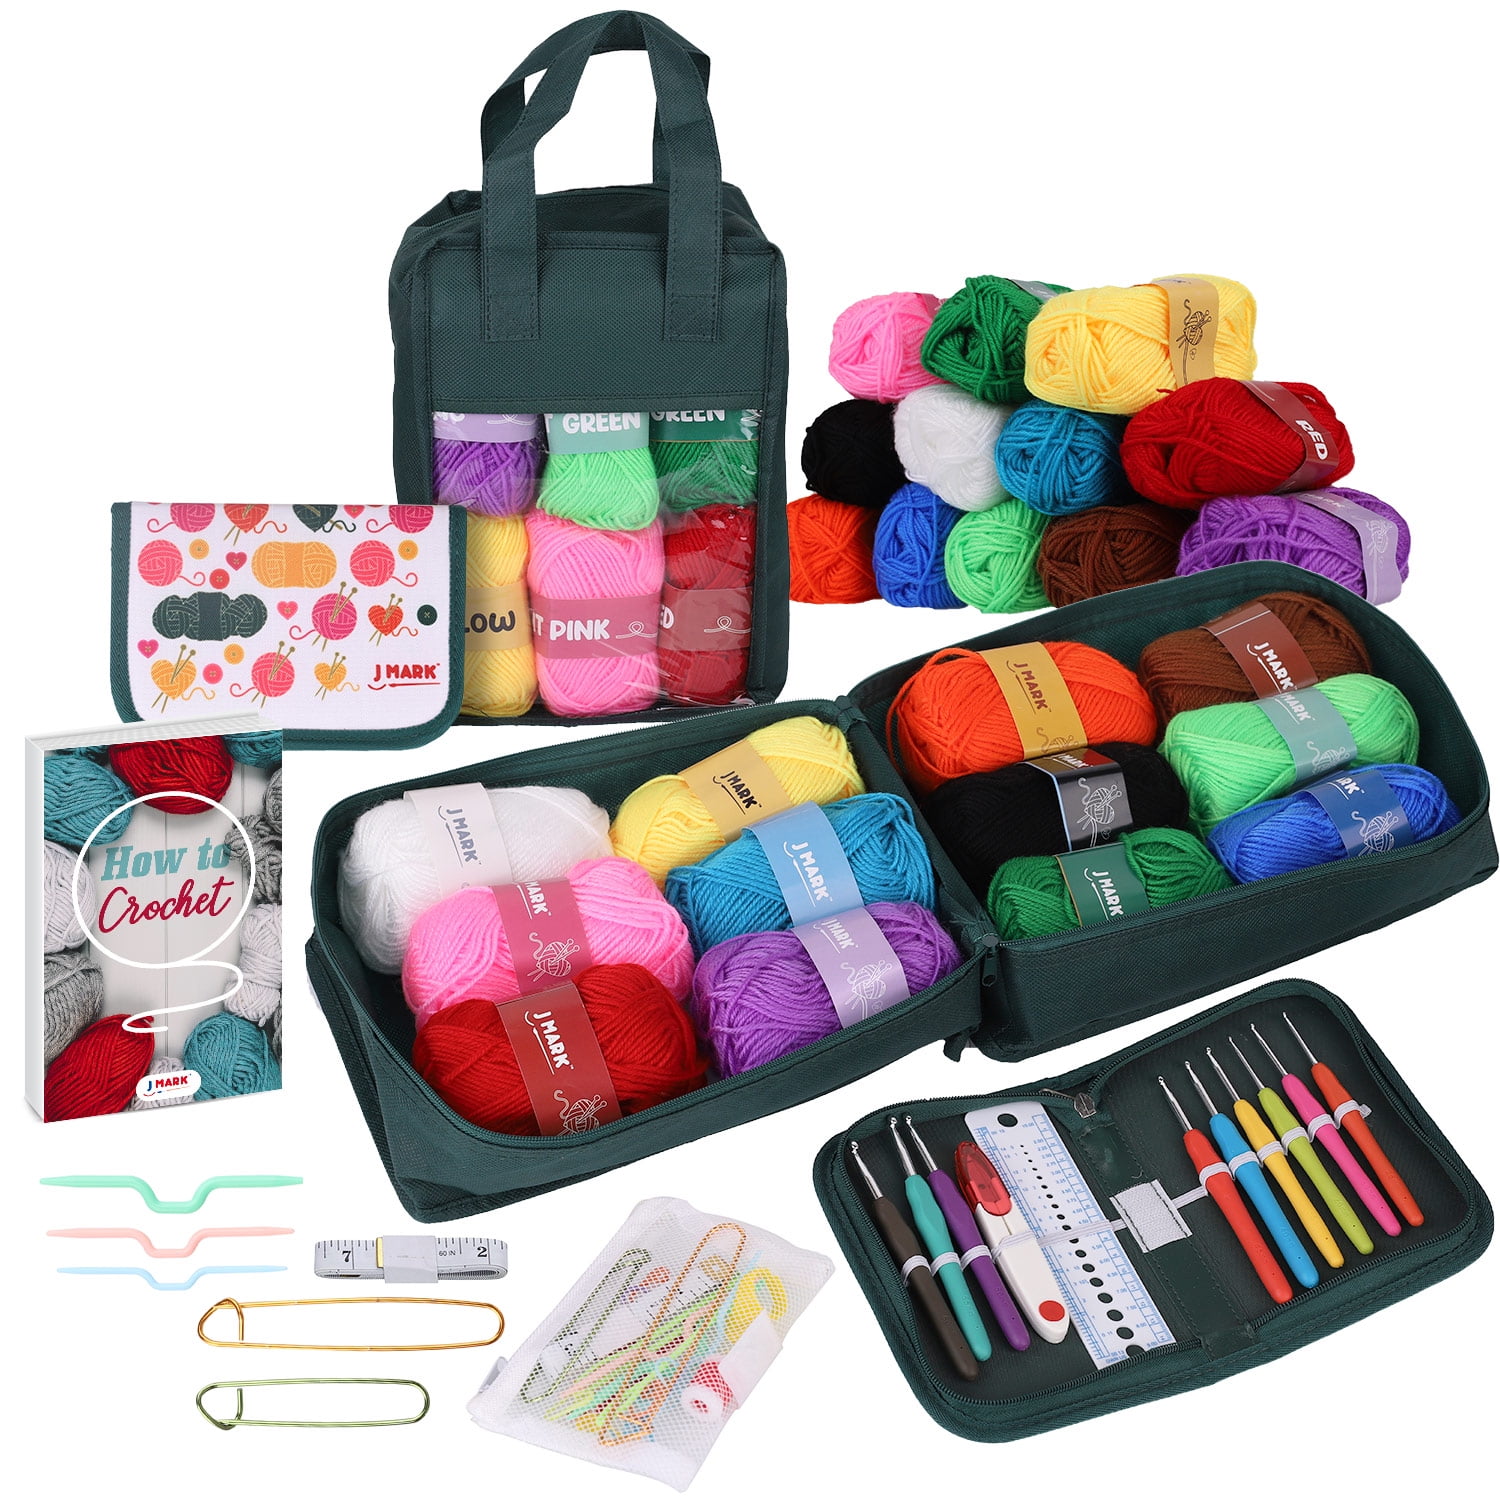 Aeelike Crocheting Kit with Yarn,68pcs All in One Crochet Kit